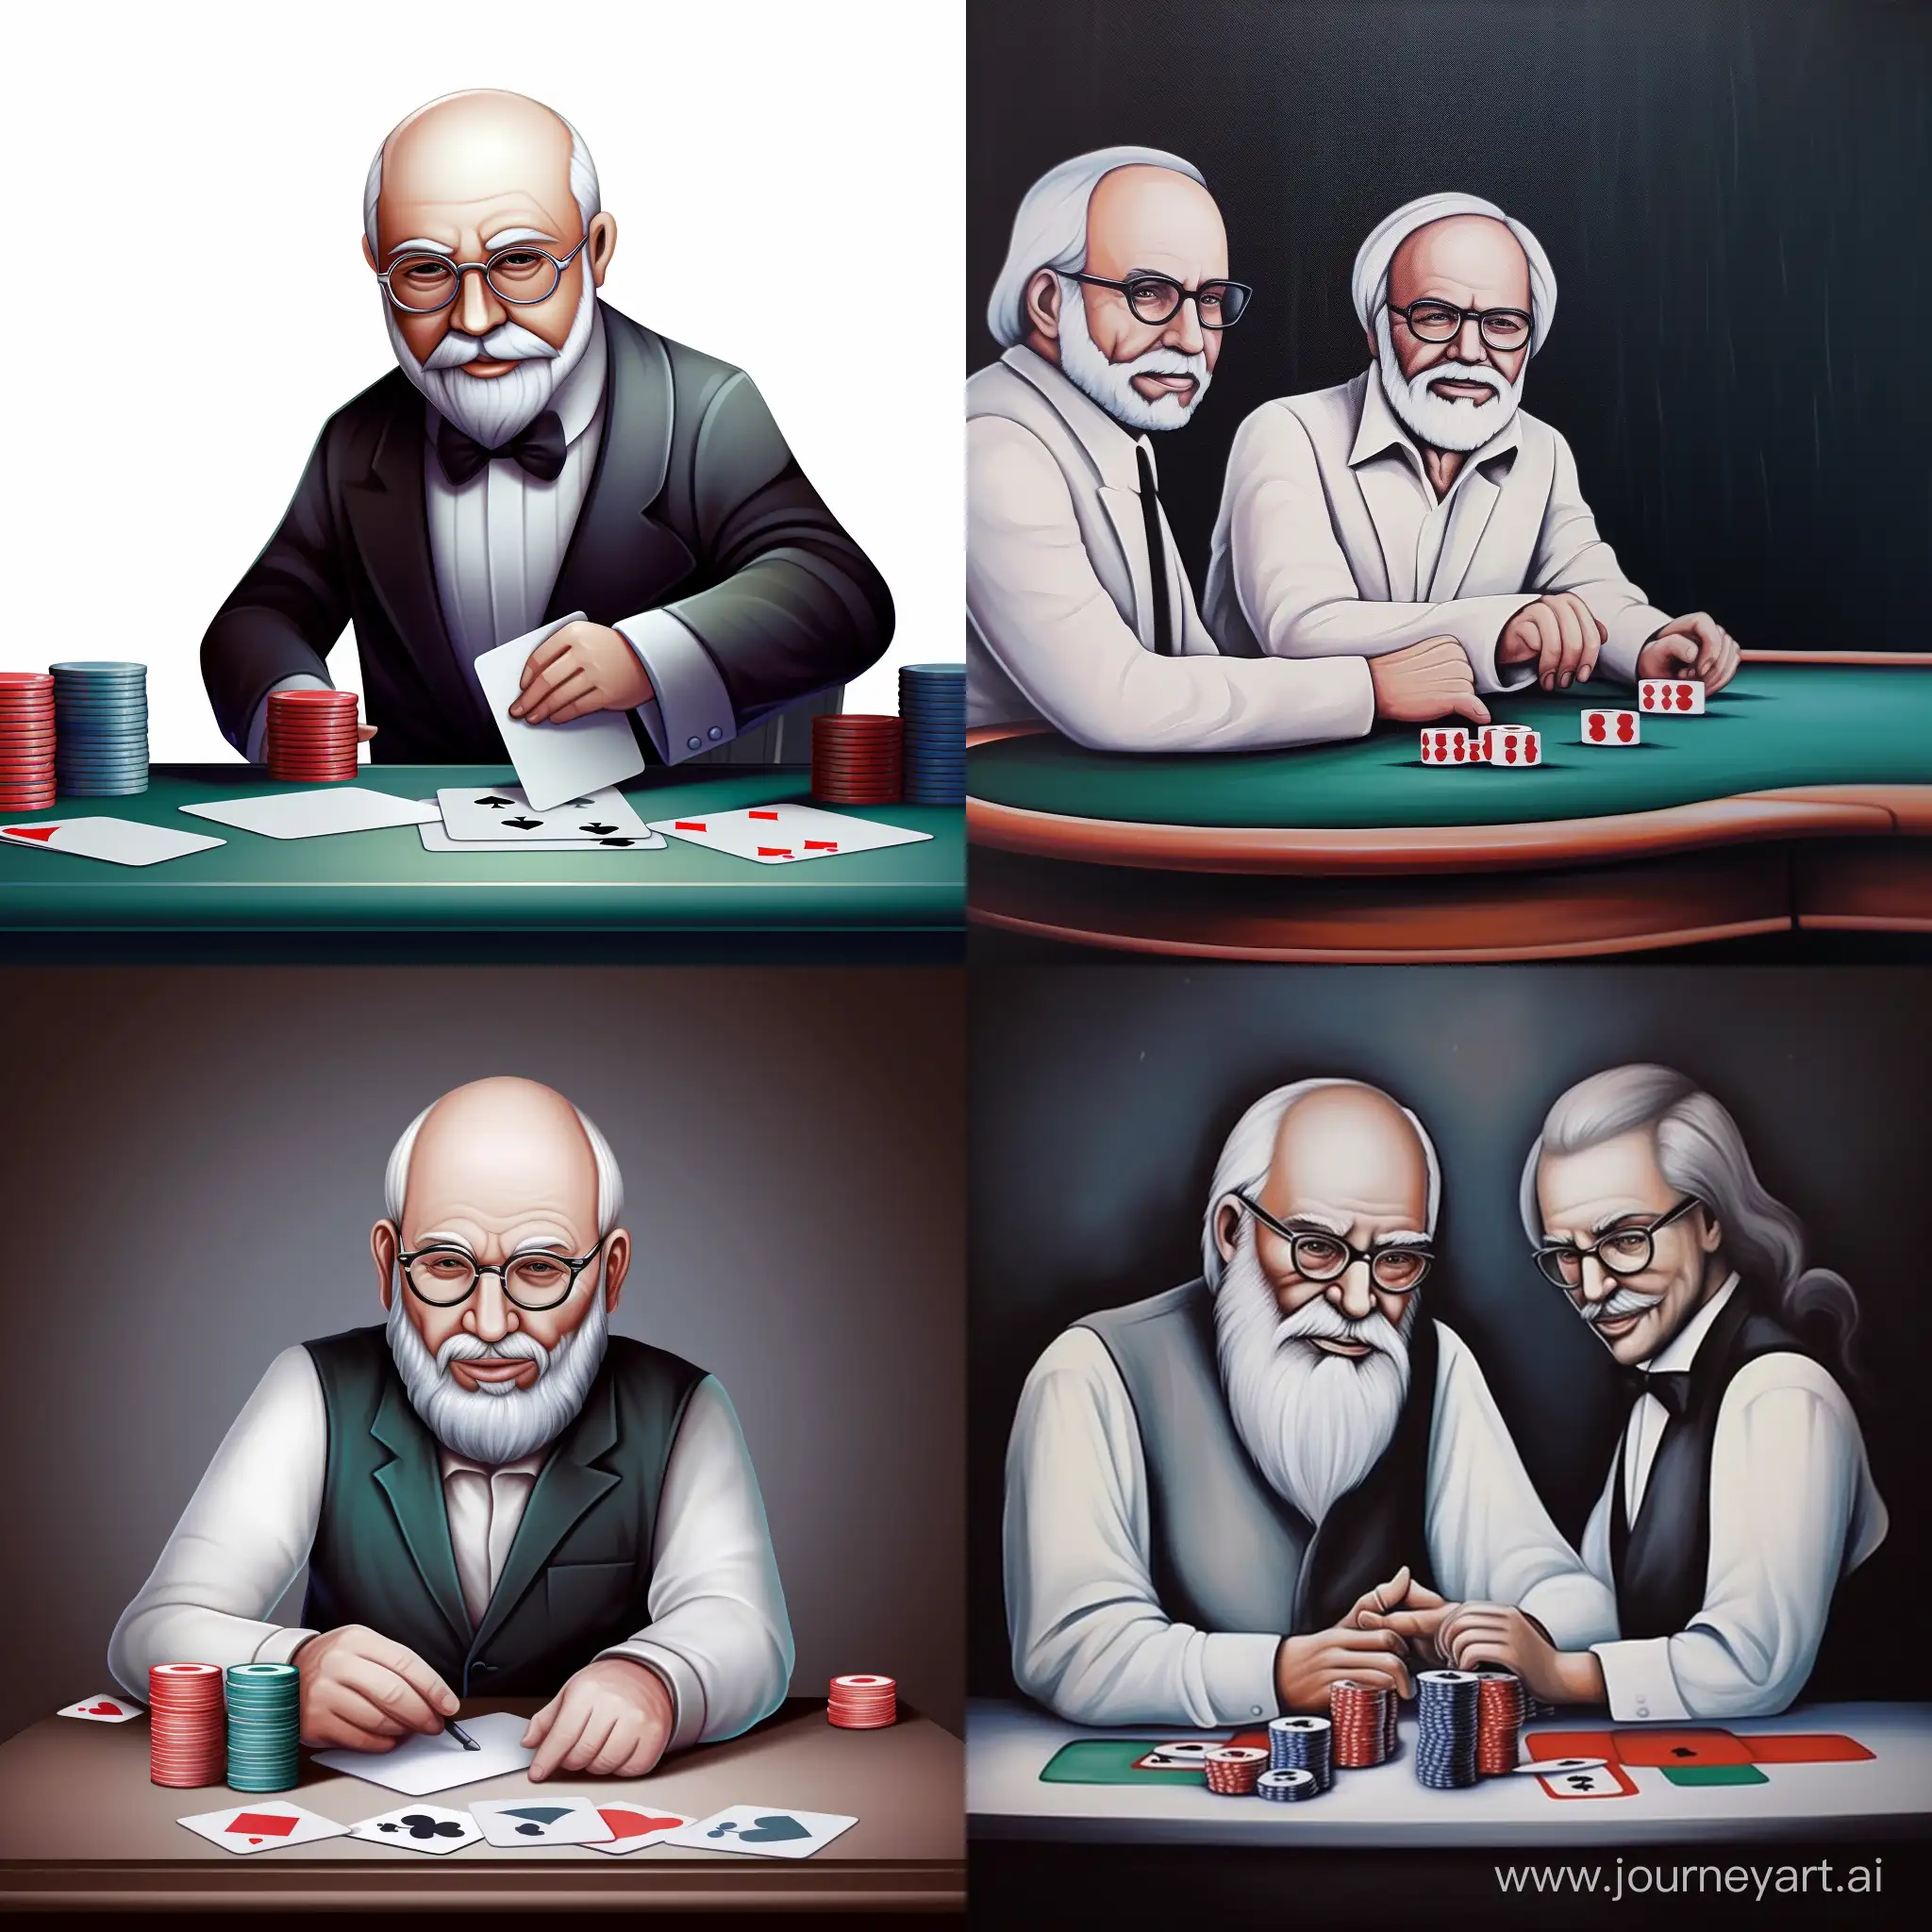 Entertaining-Game-Night-John-Williams-and-Judeska-in-Playful-Strip-Poker-Duel